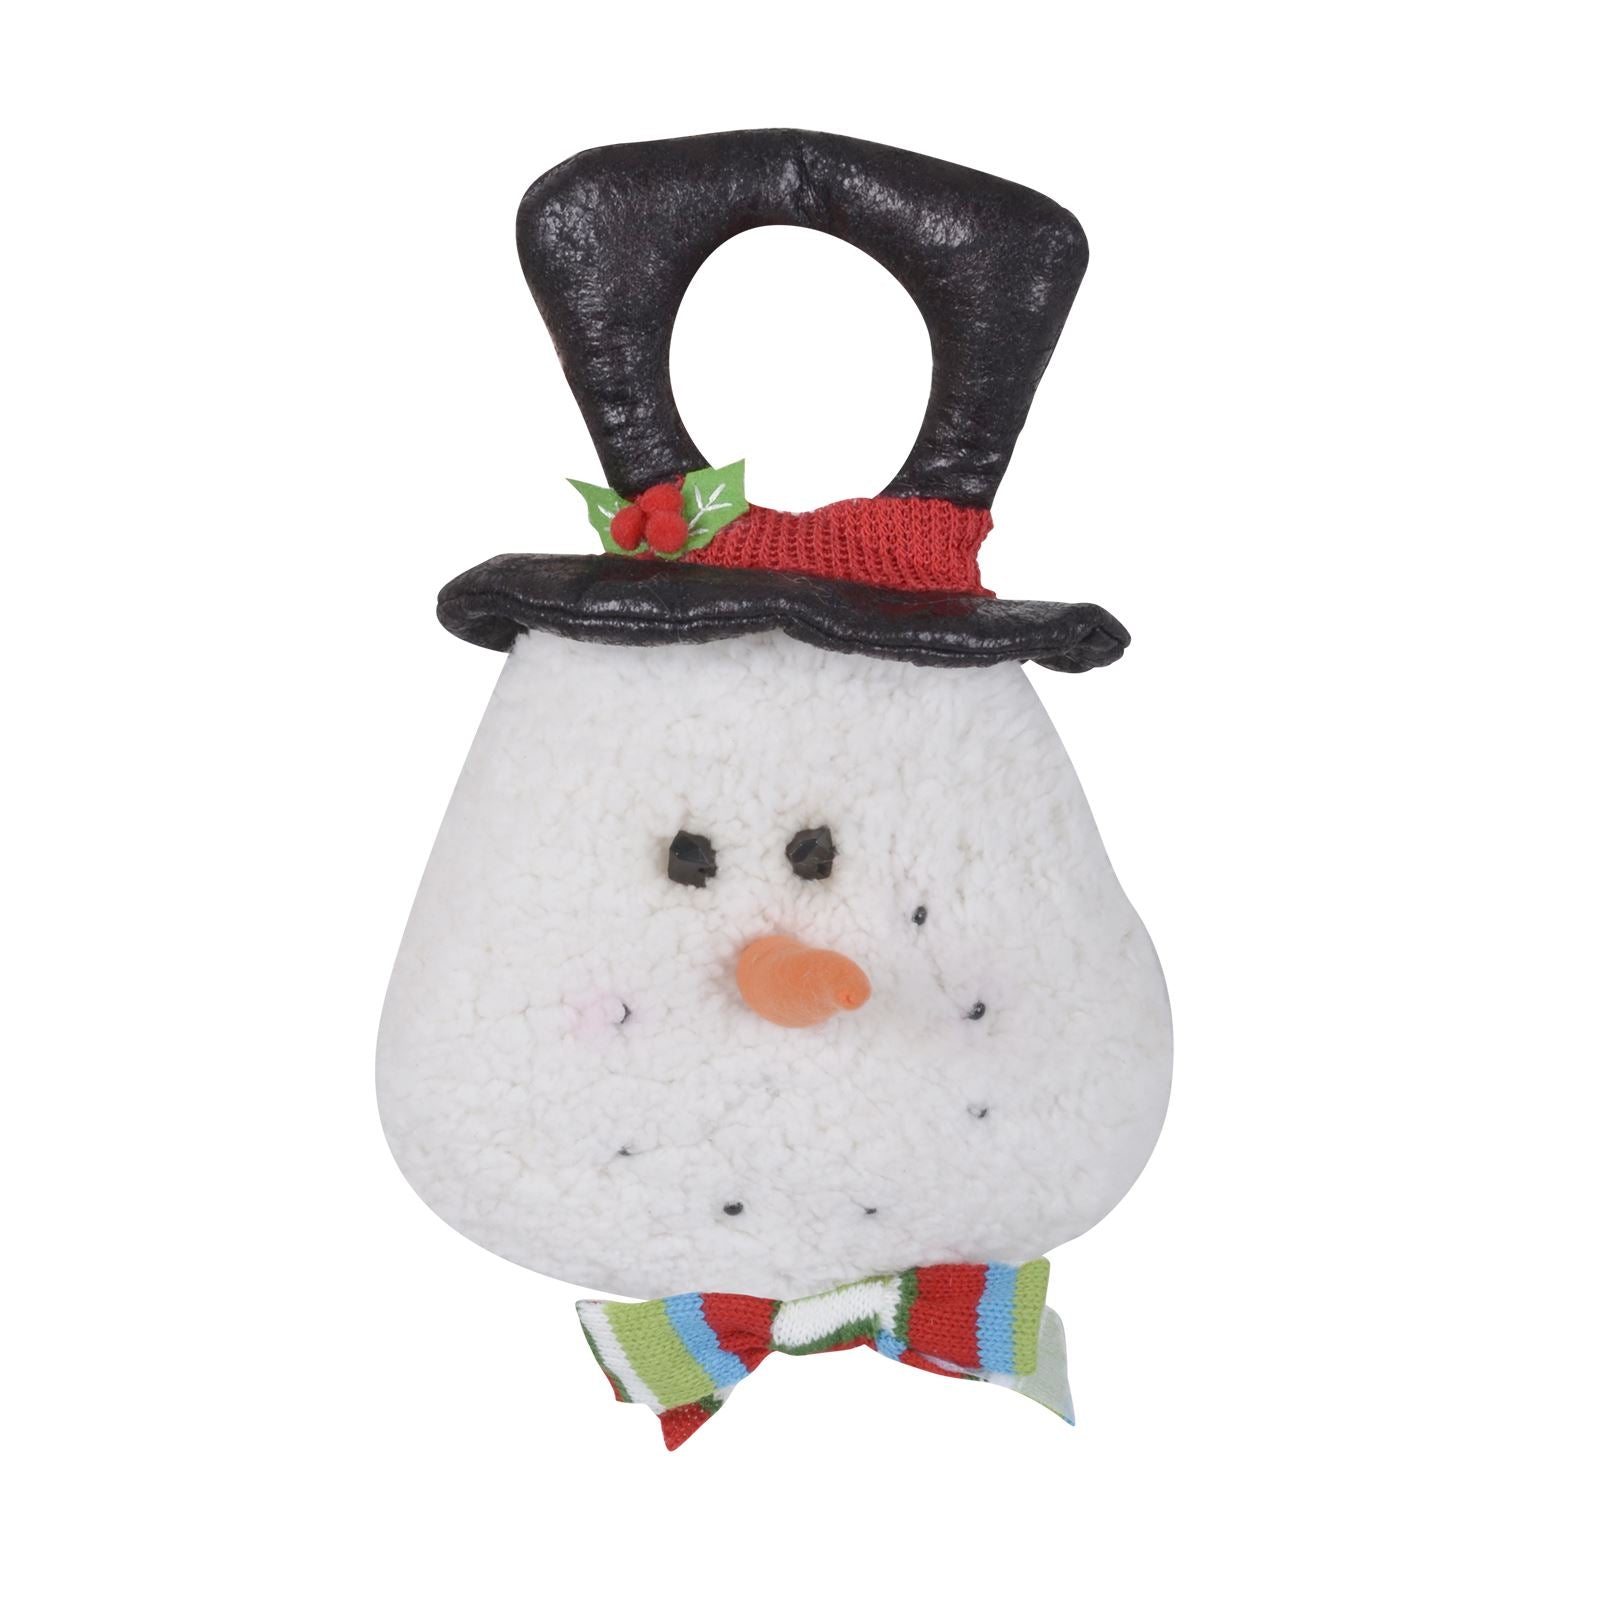 Mr Crimbo Christmas Novelty Door Hanger Plush Reindeer Snowman - MrCrimbo.co.uk -XS4373 - Snowman -christmas decorations